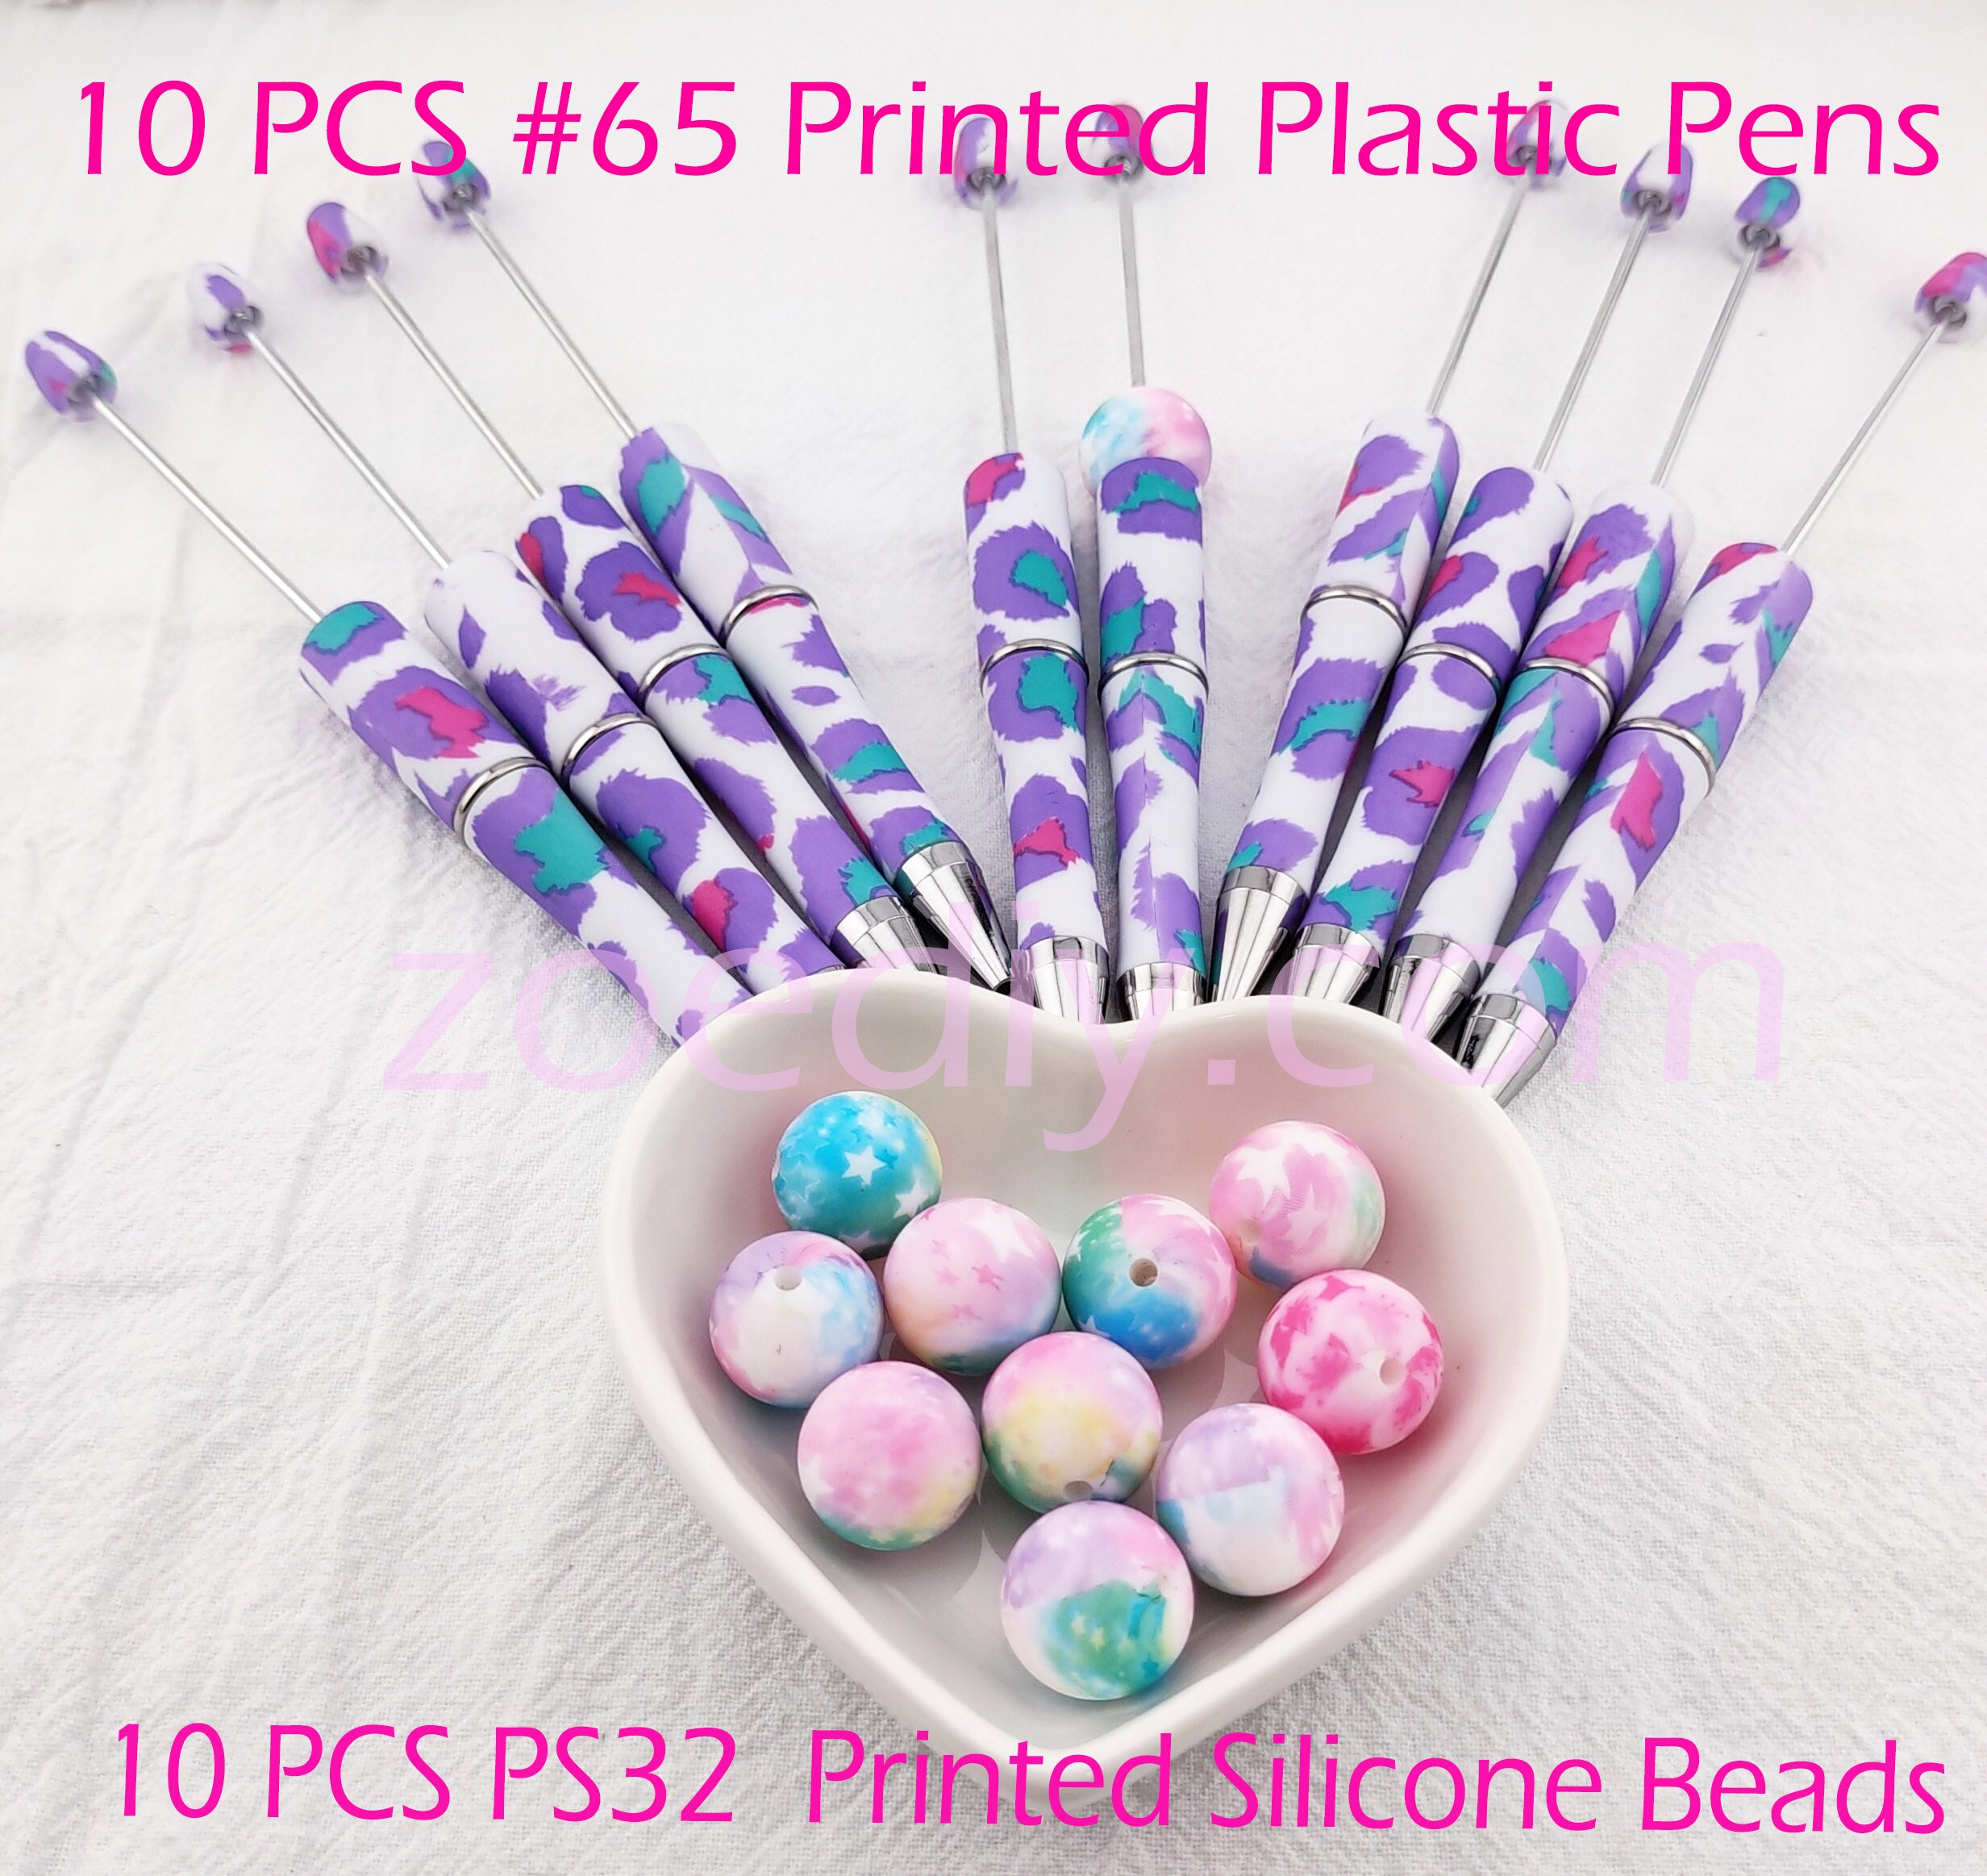 10 PCS Purple #65 Printed Plastic Pens + 10 PCS PS32 Printed Silicone Beads SET